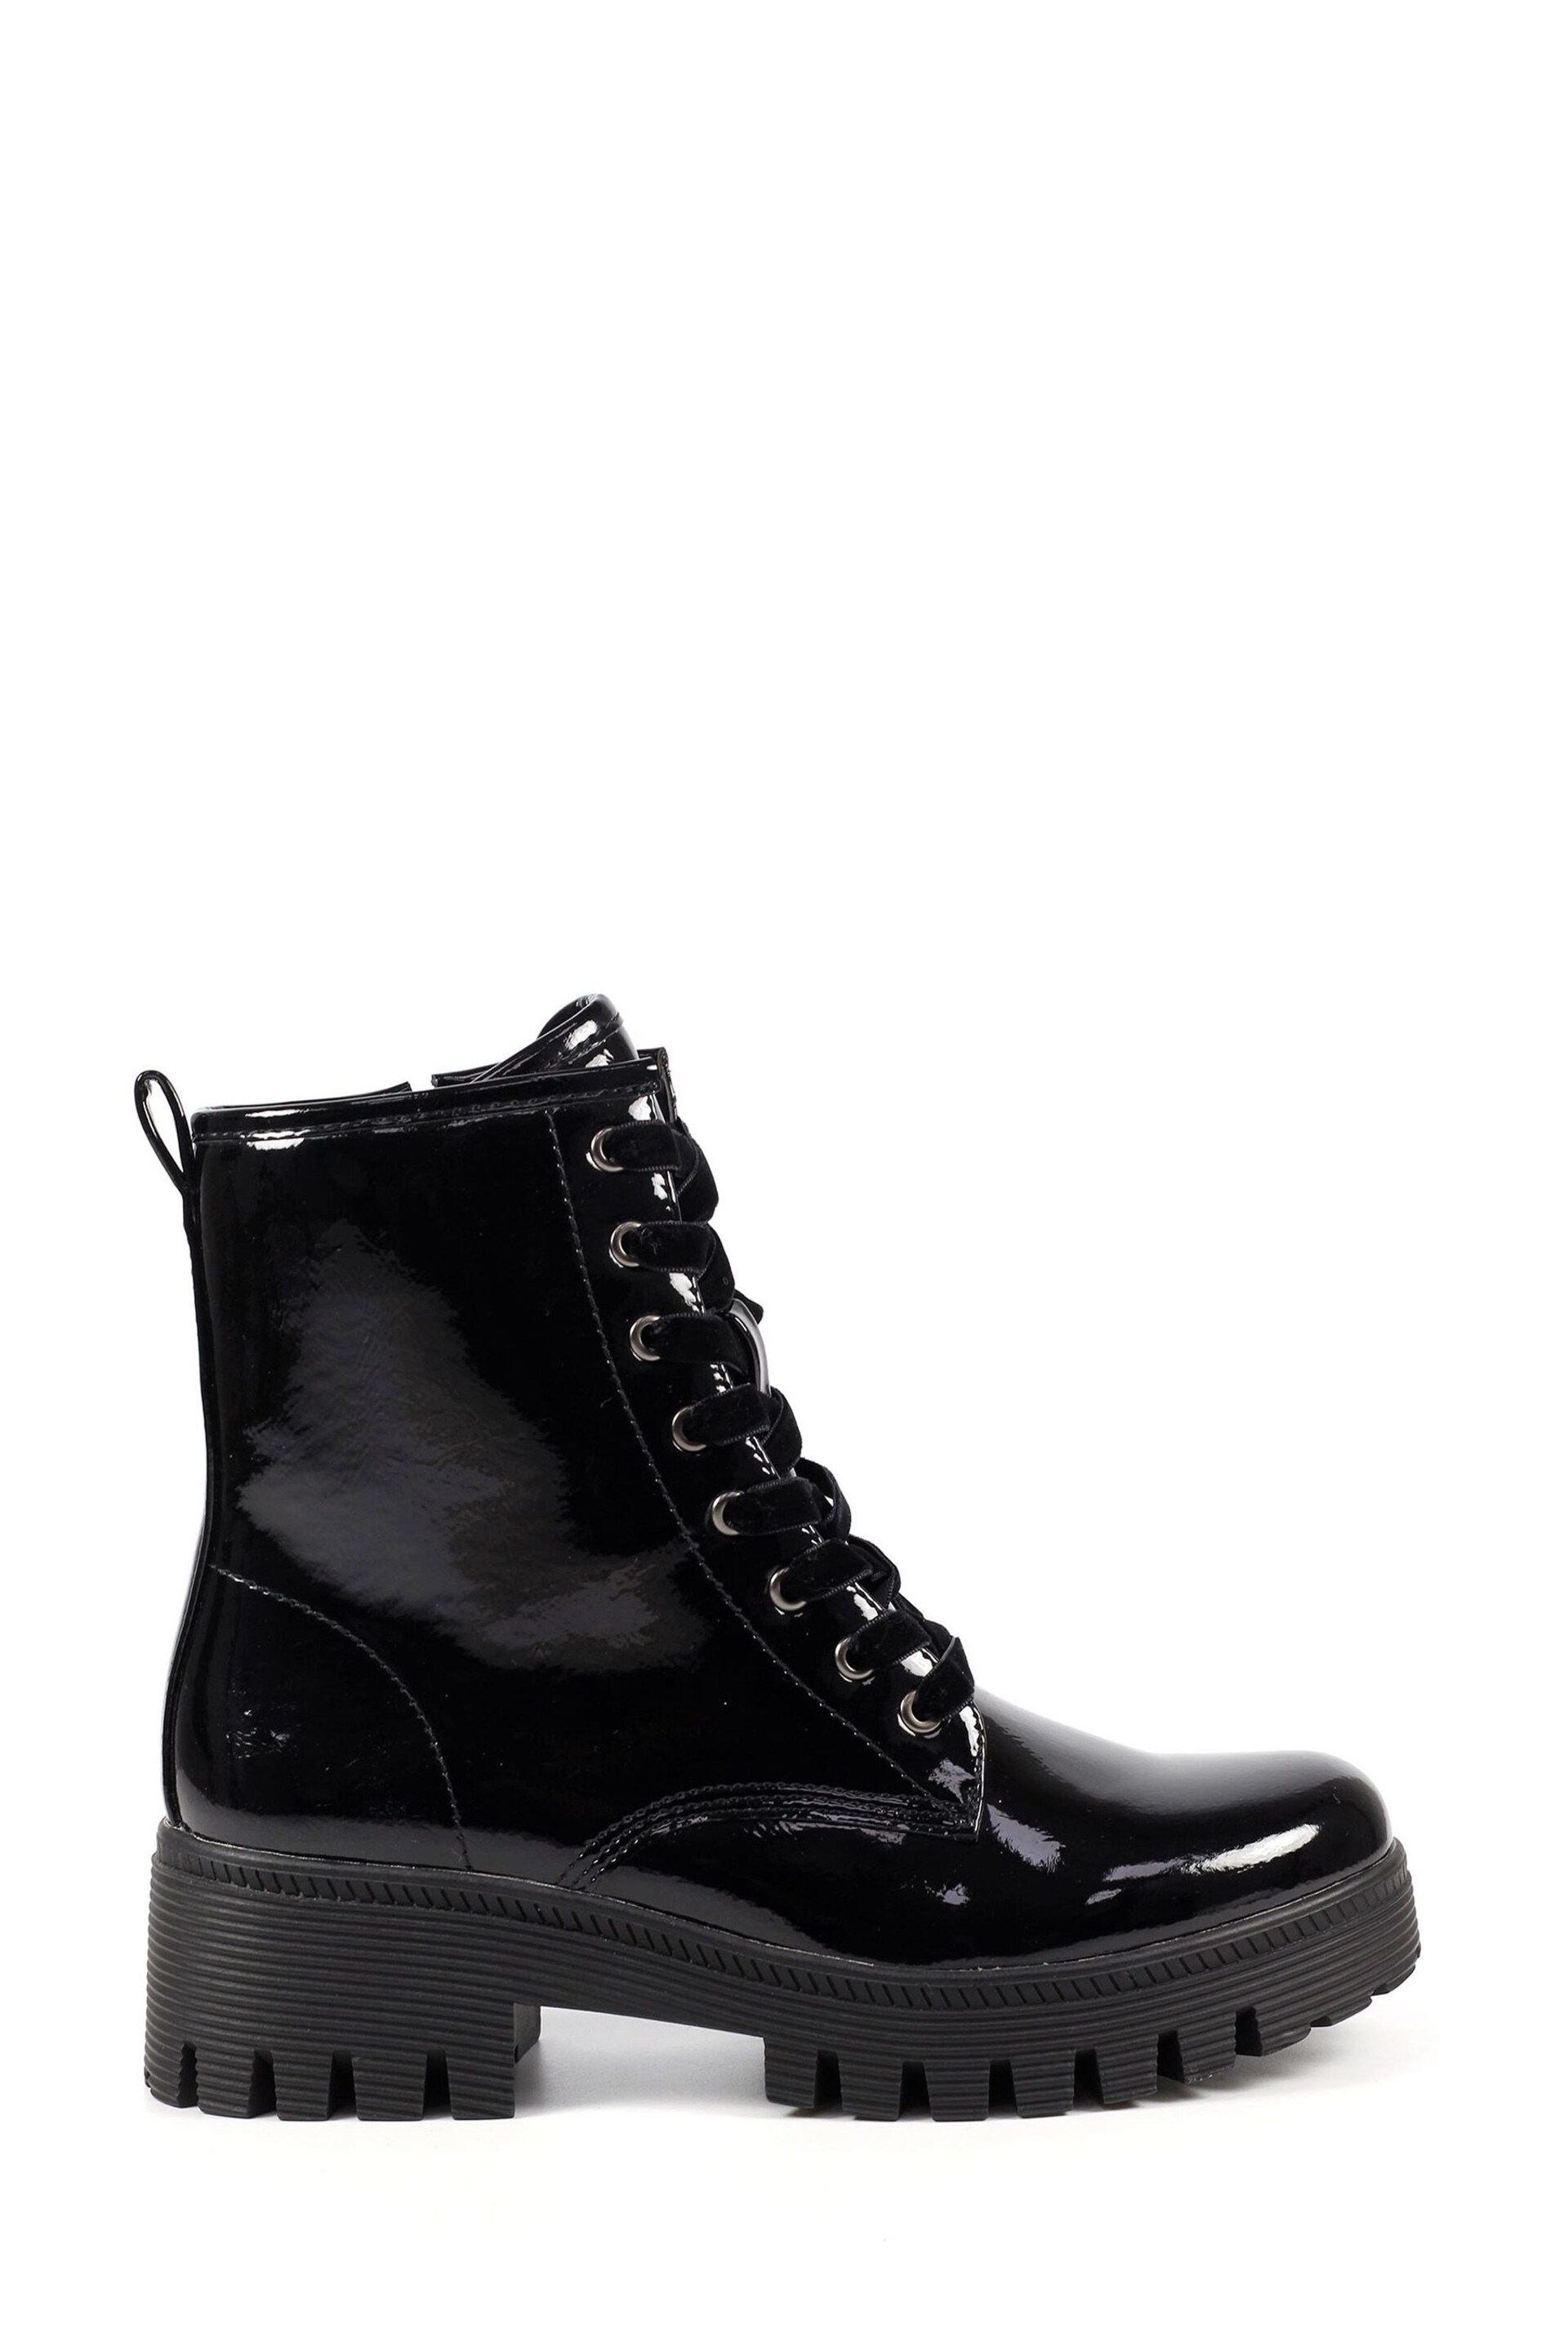 Lunar Danni Patent Black Ankle Boots - Image 1 of 8